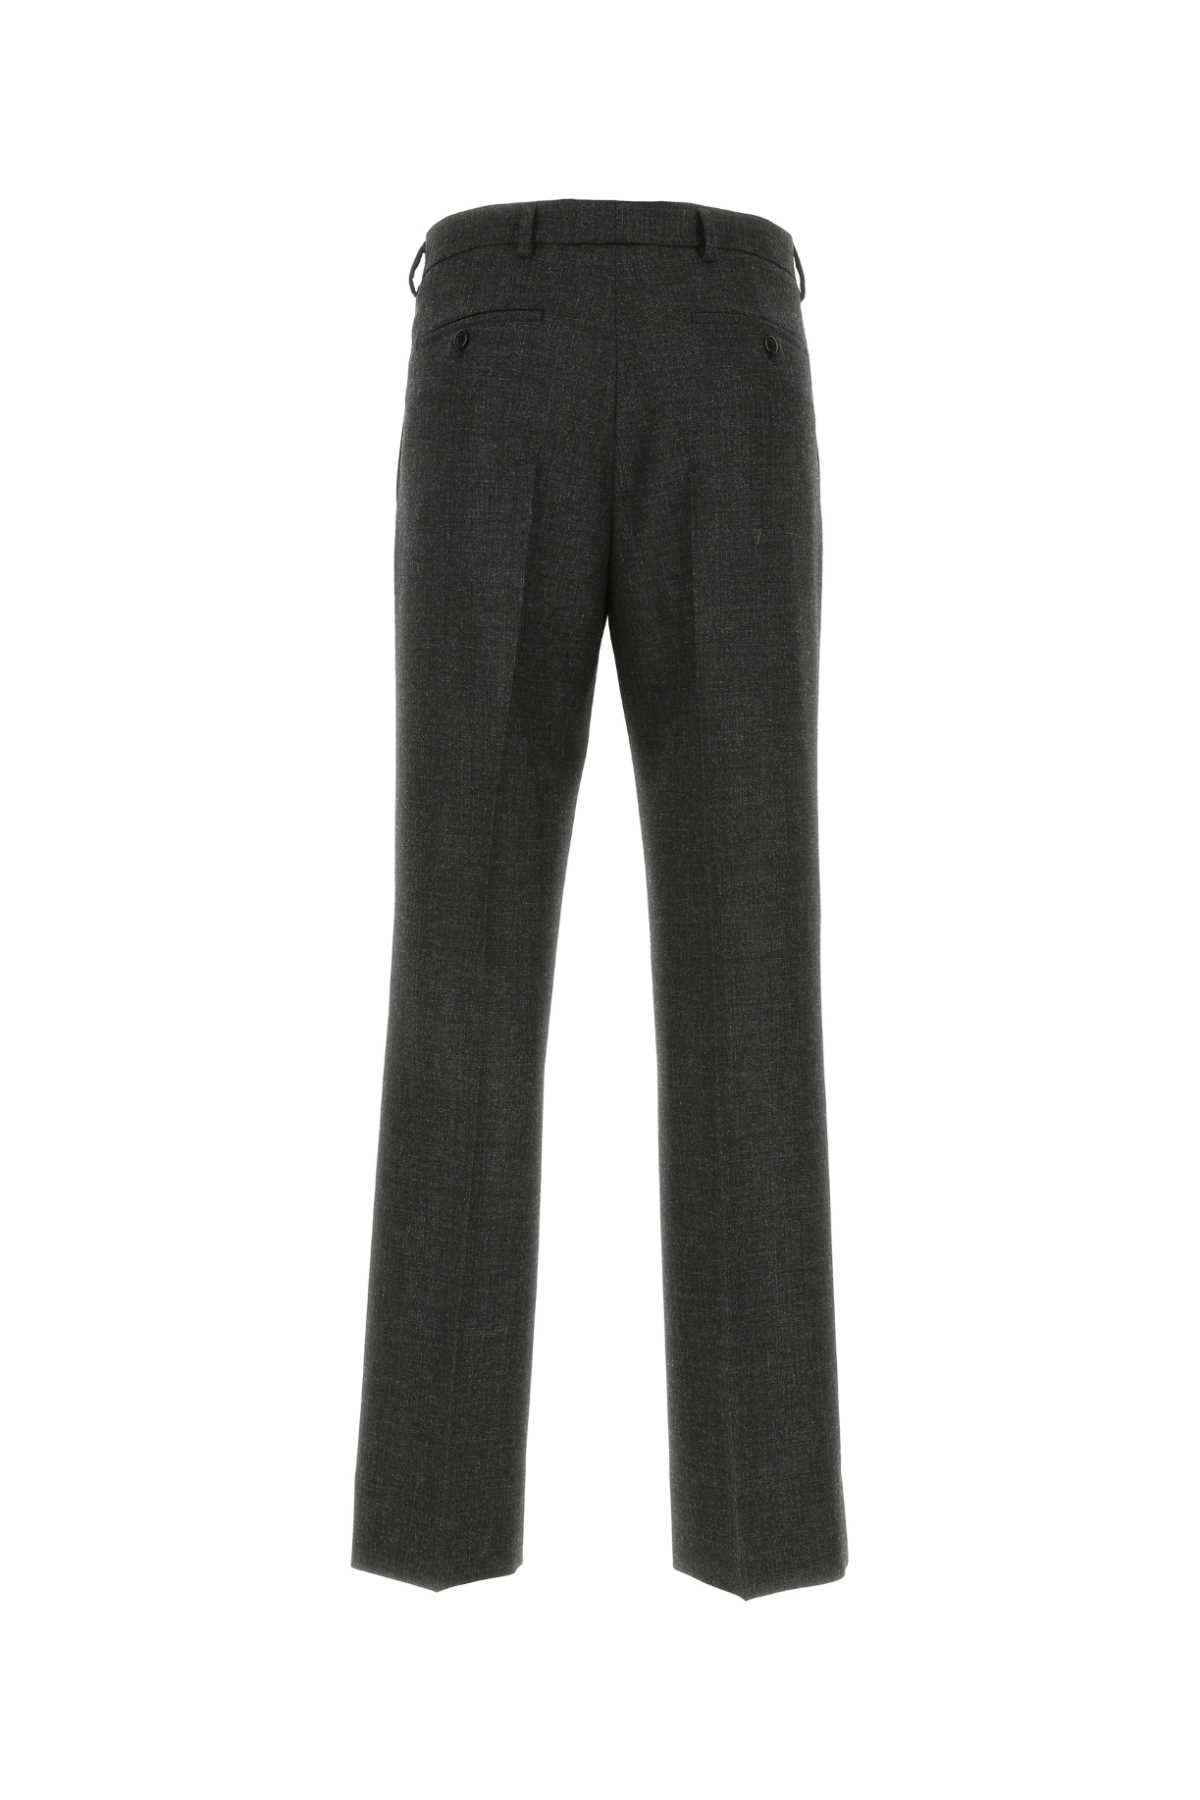 Prada Melange Dark Grey Wool Pant In F0308